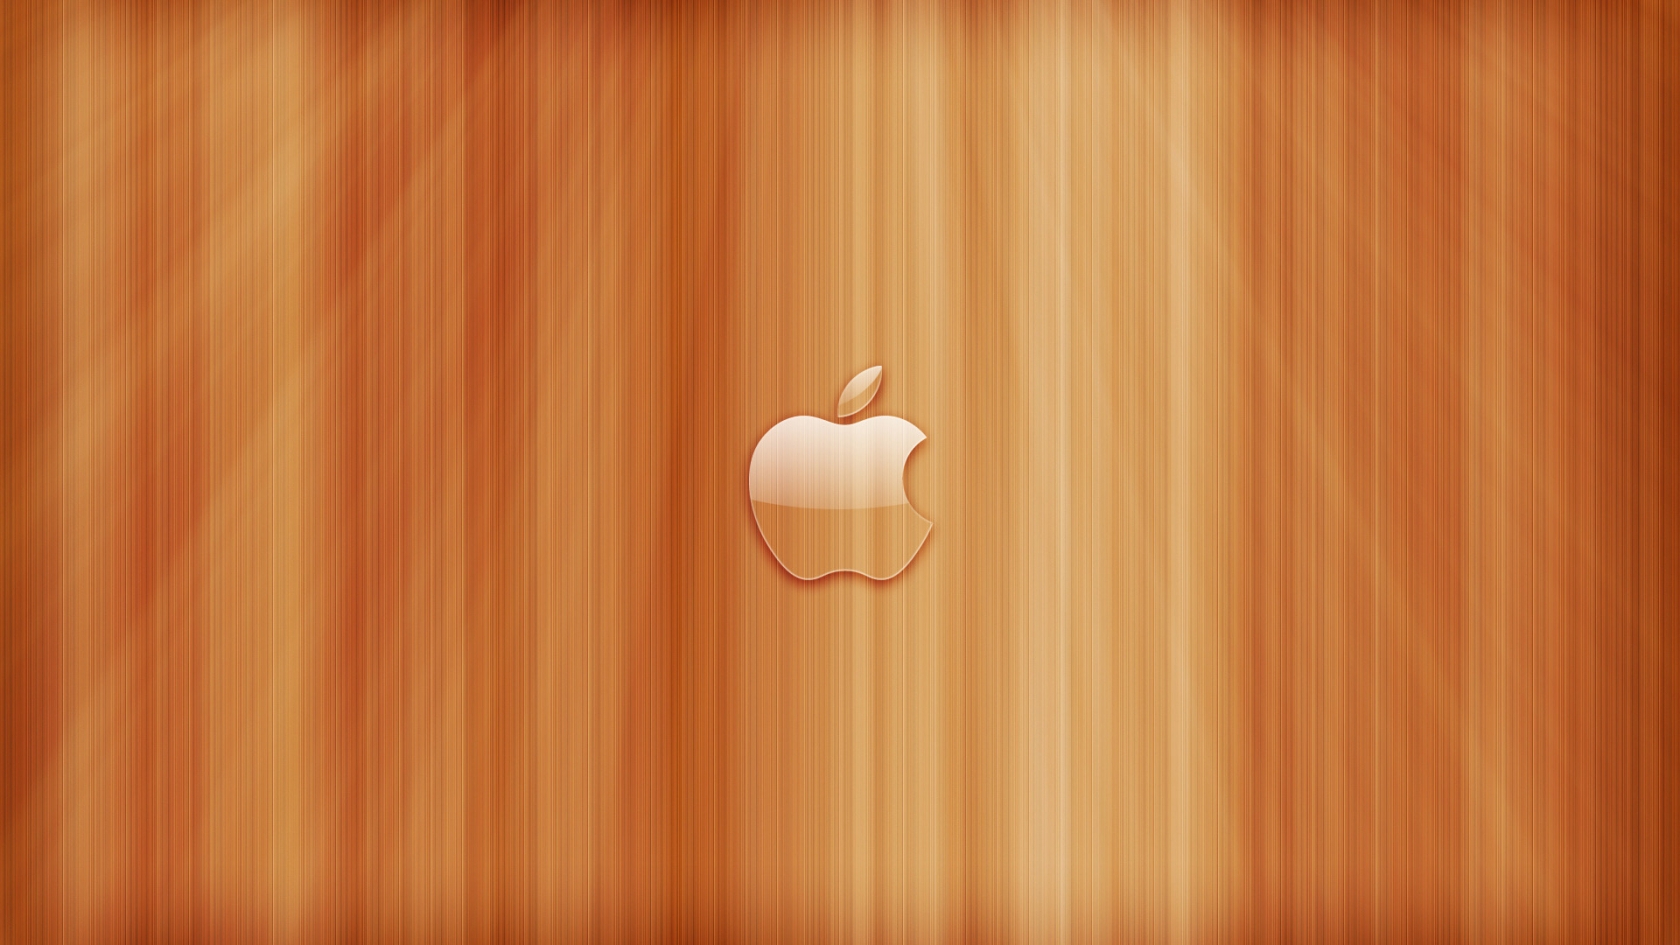 Apple Wood for 1680 x 945 HDTV resolution